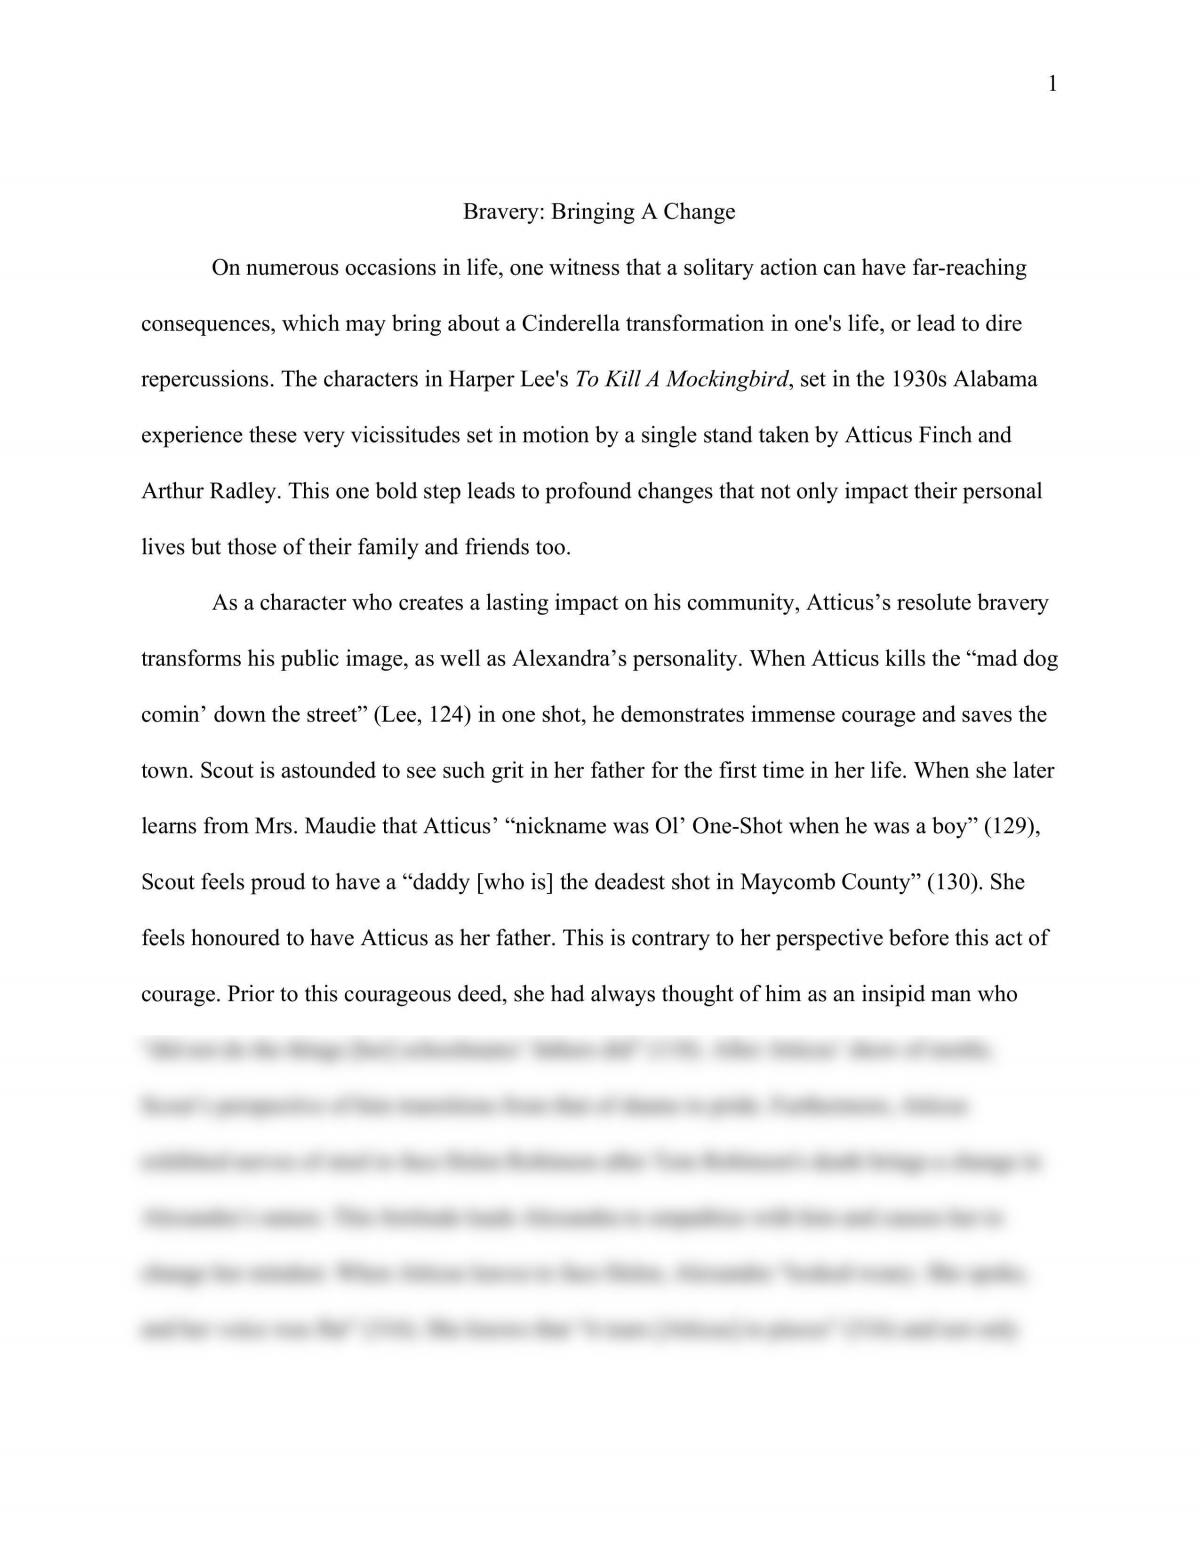 to kill a mockingbird student essays